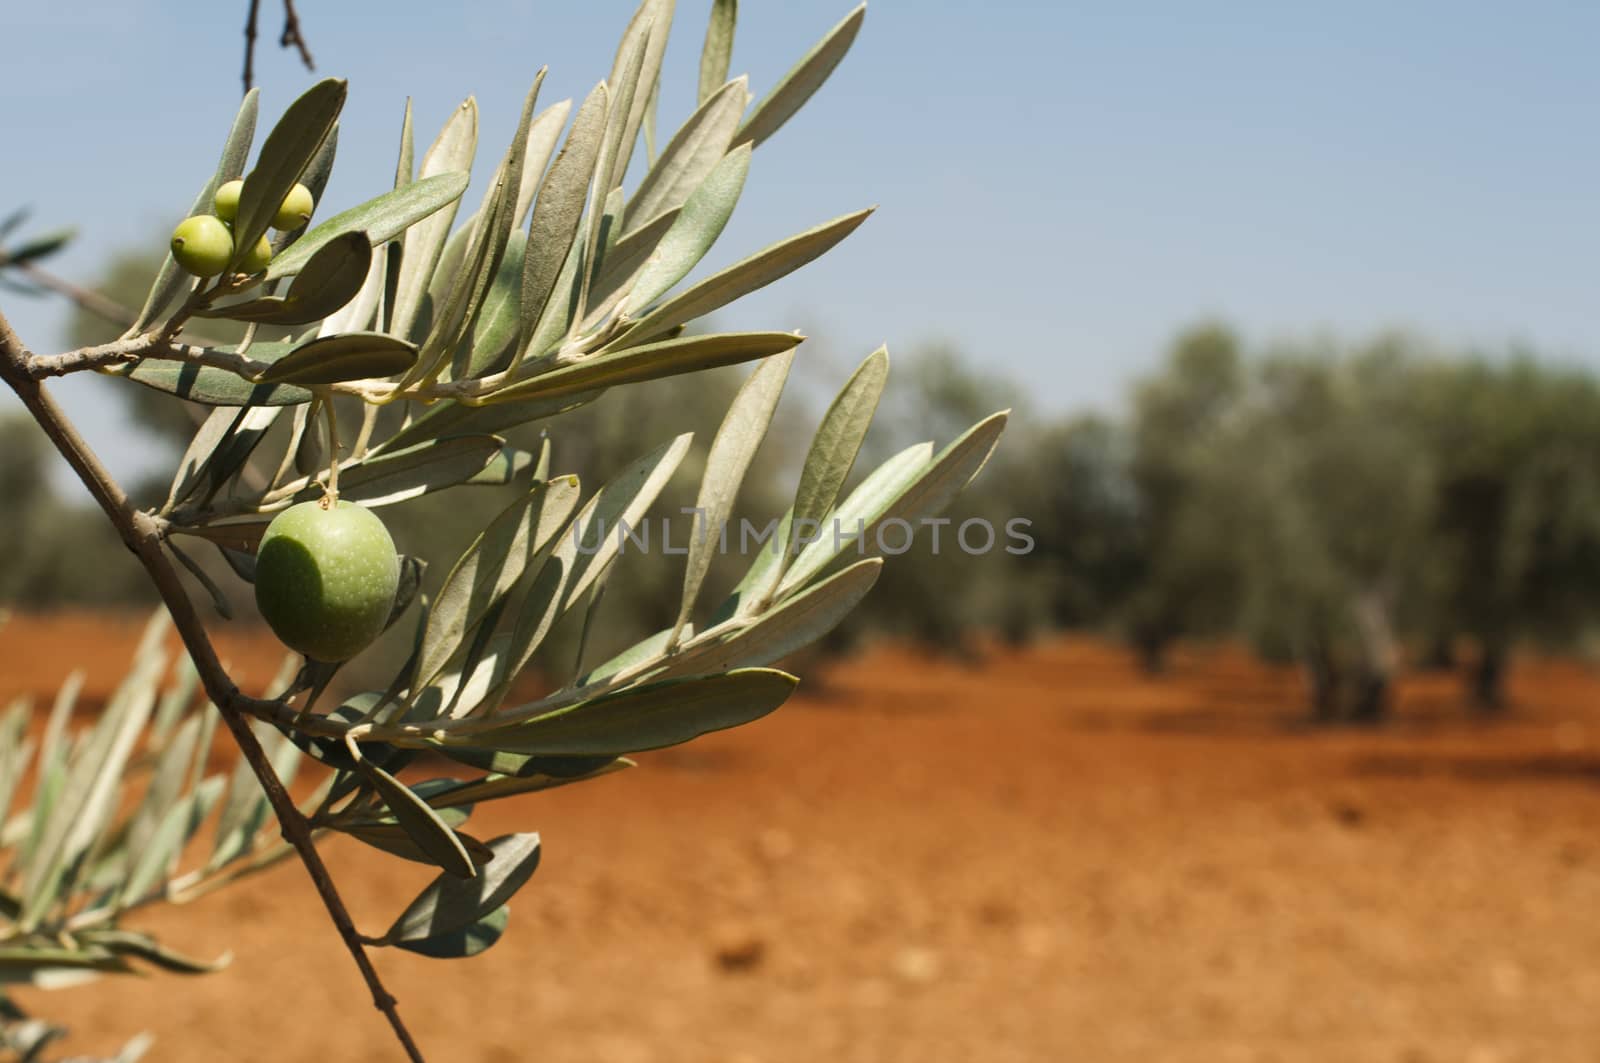 Olive plantation and olives on branch by deyan_georgiev